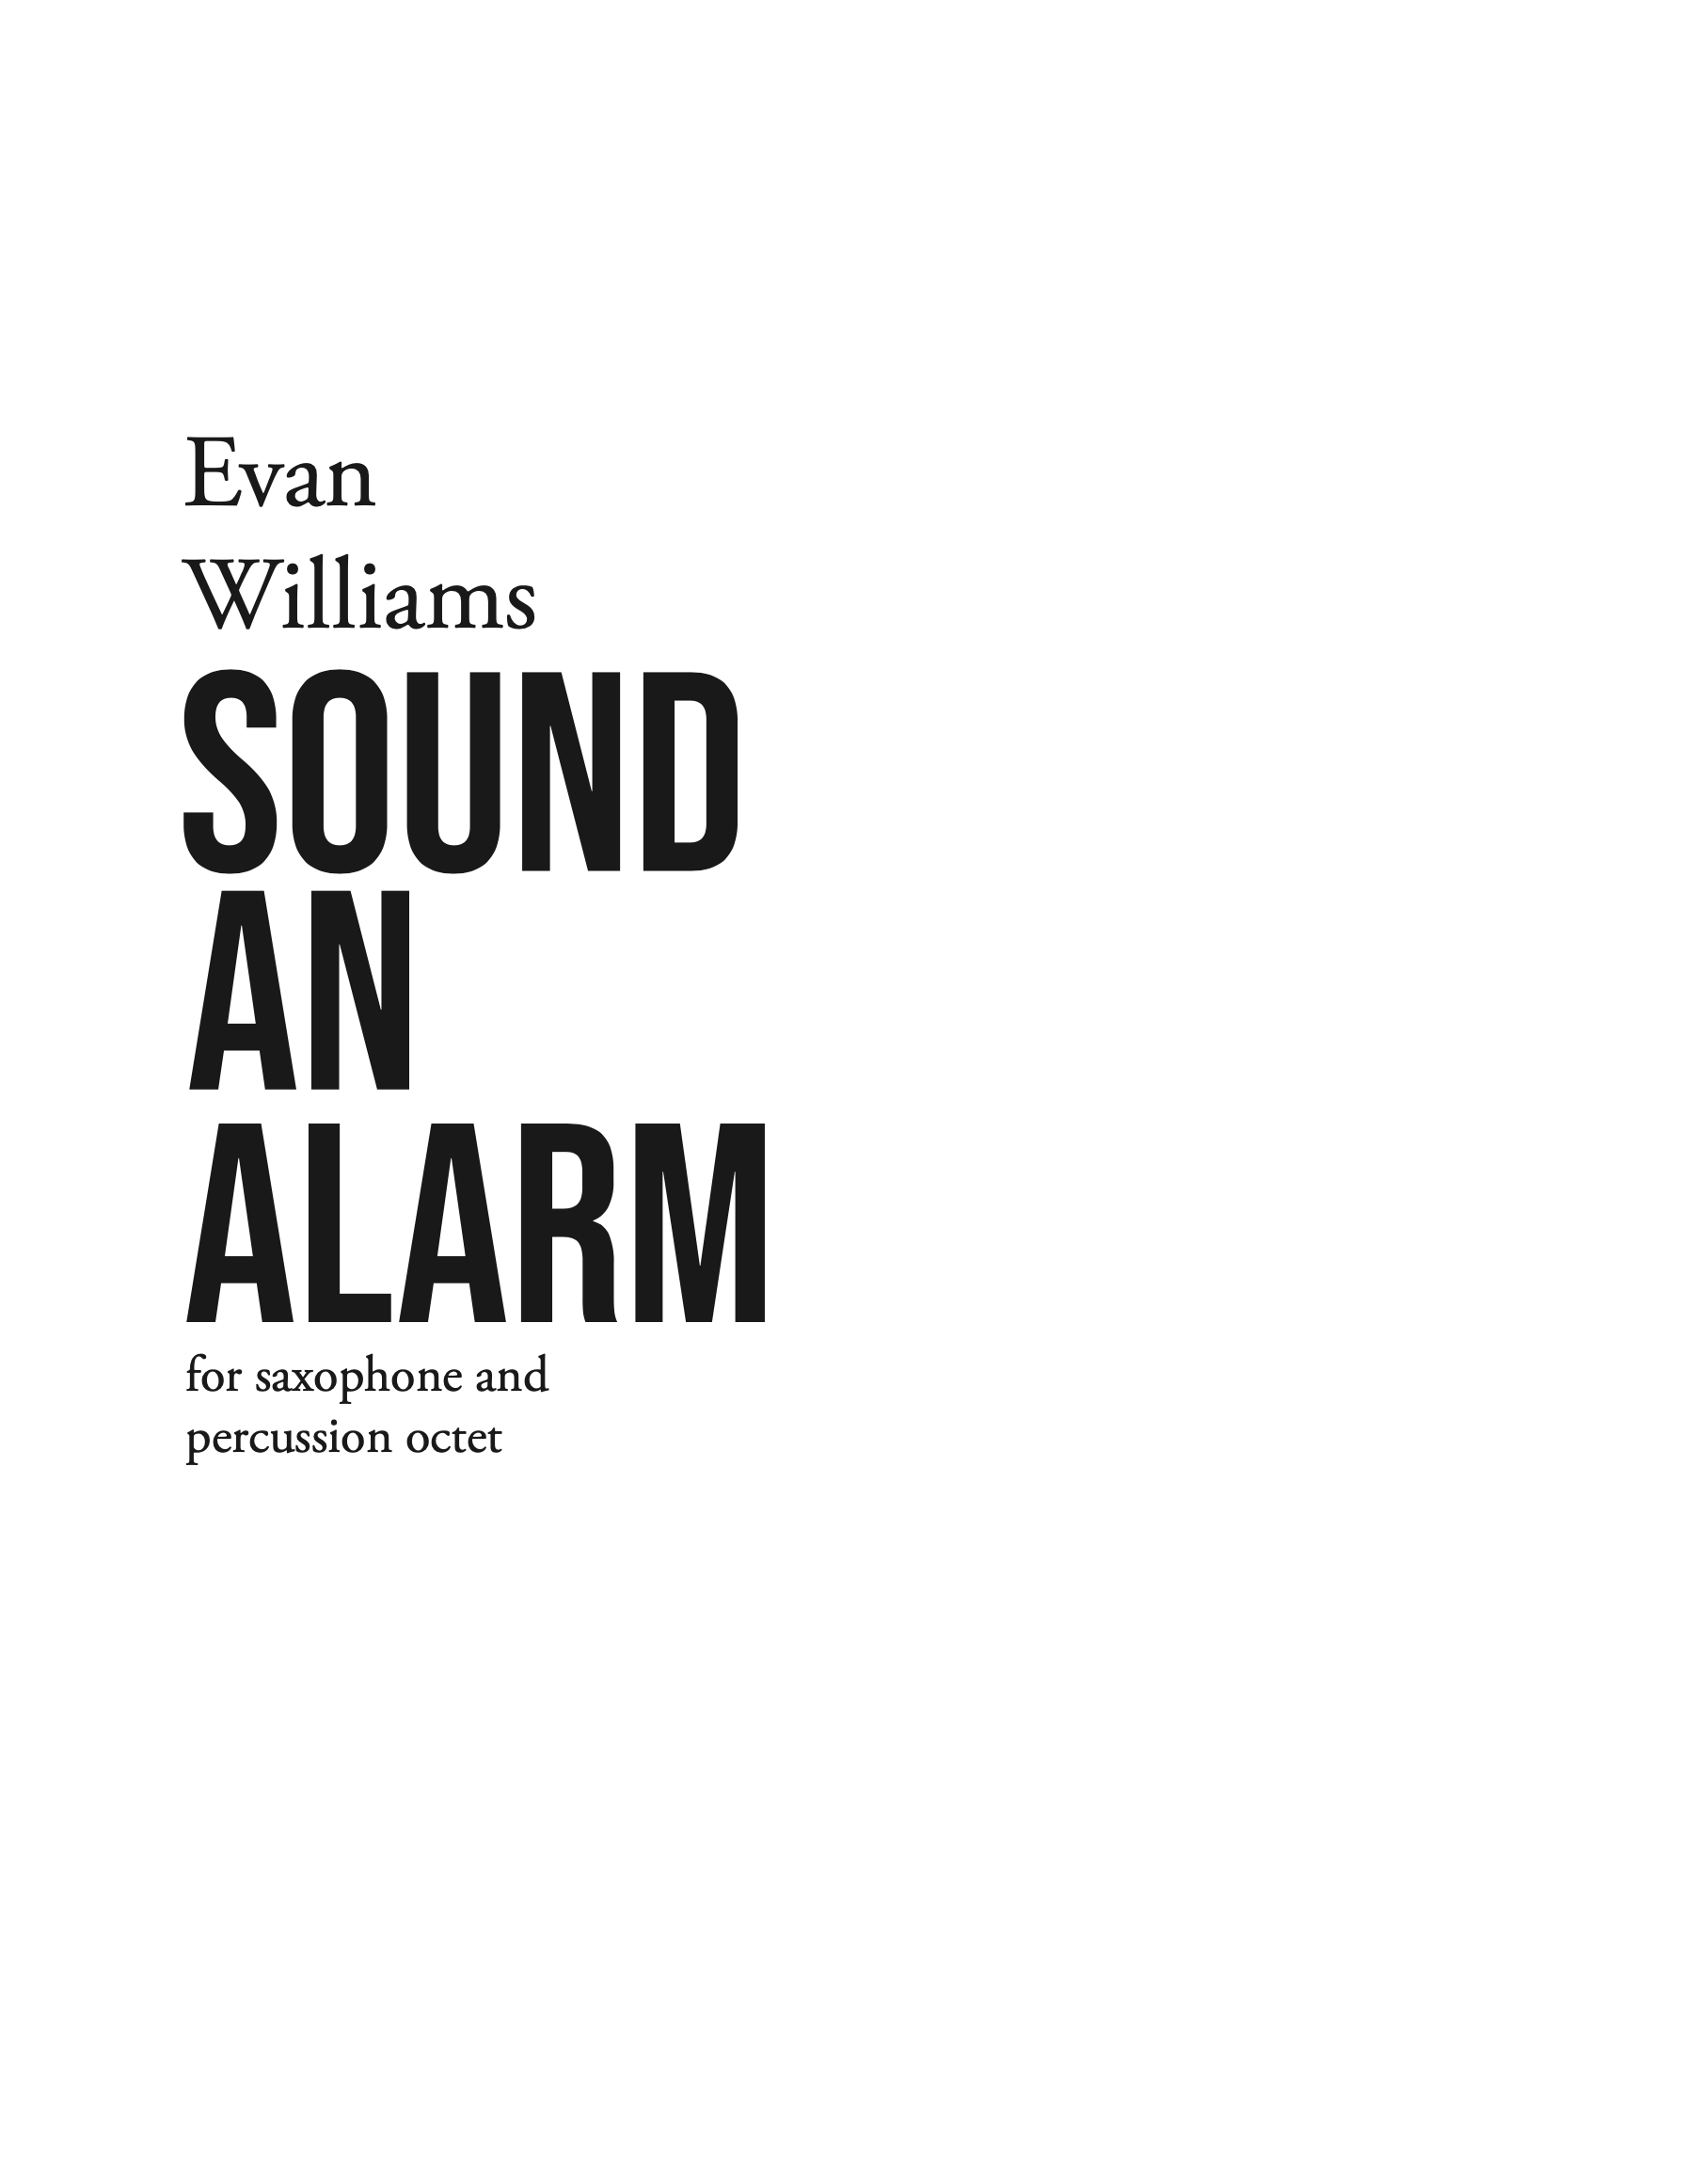 Sound An Alarm by Evan Williams